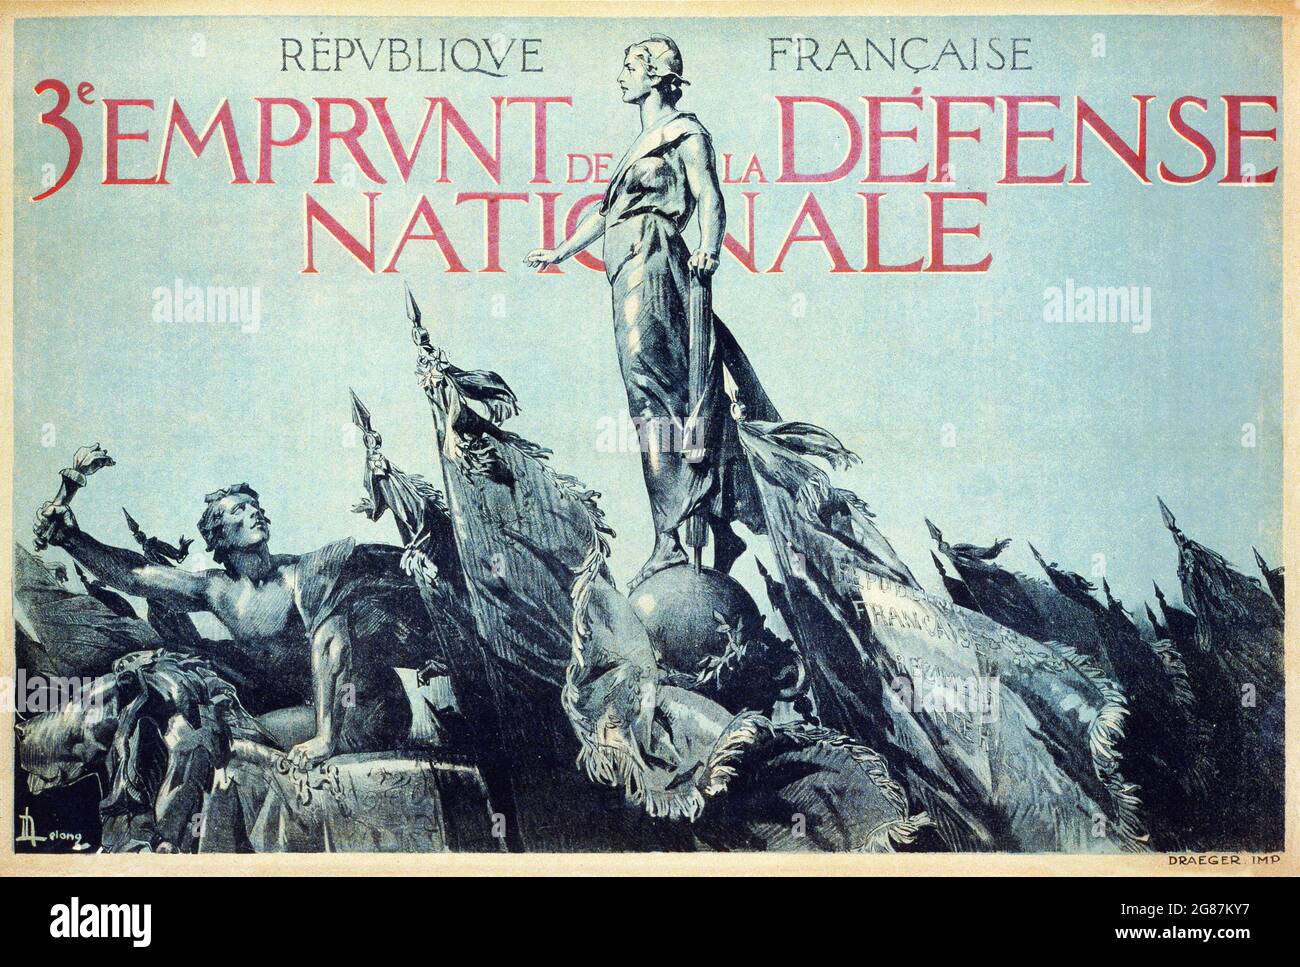 Vintage-Poster. République Française. 3e Emprunt de la Défense Nationale von Draeger 1917. Kriegsanleihen und -Fonds, Frankreich. Marianne (französisches Emblem). Stockfoto